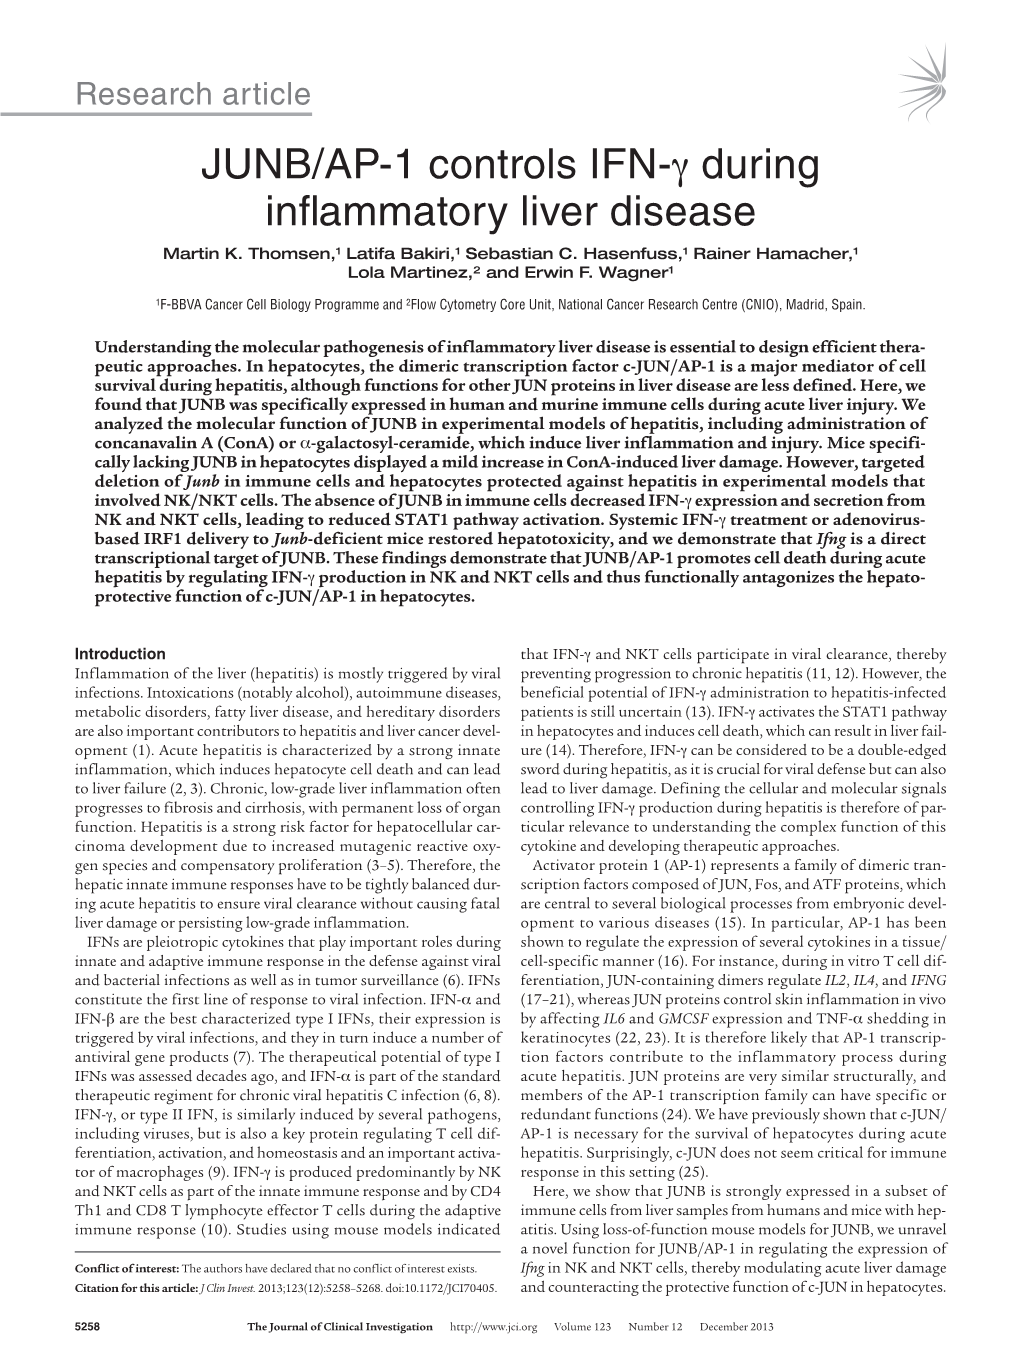 JUNB/AP-1 Controls IFN-Γ During Inflammatory Liver Disease Martin K